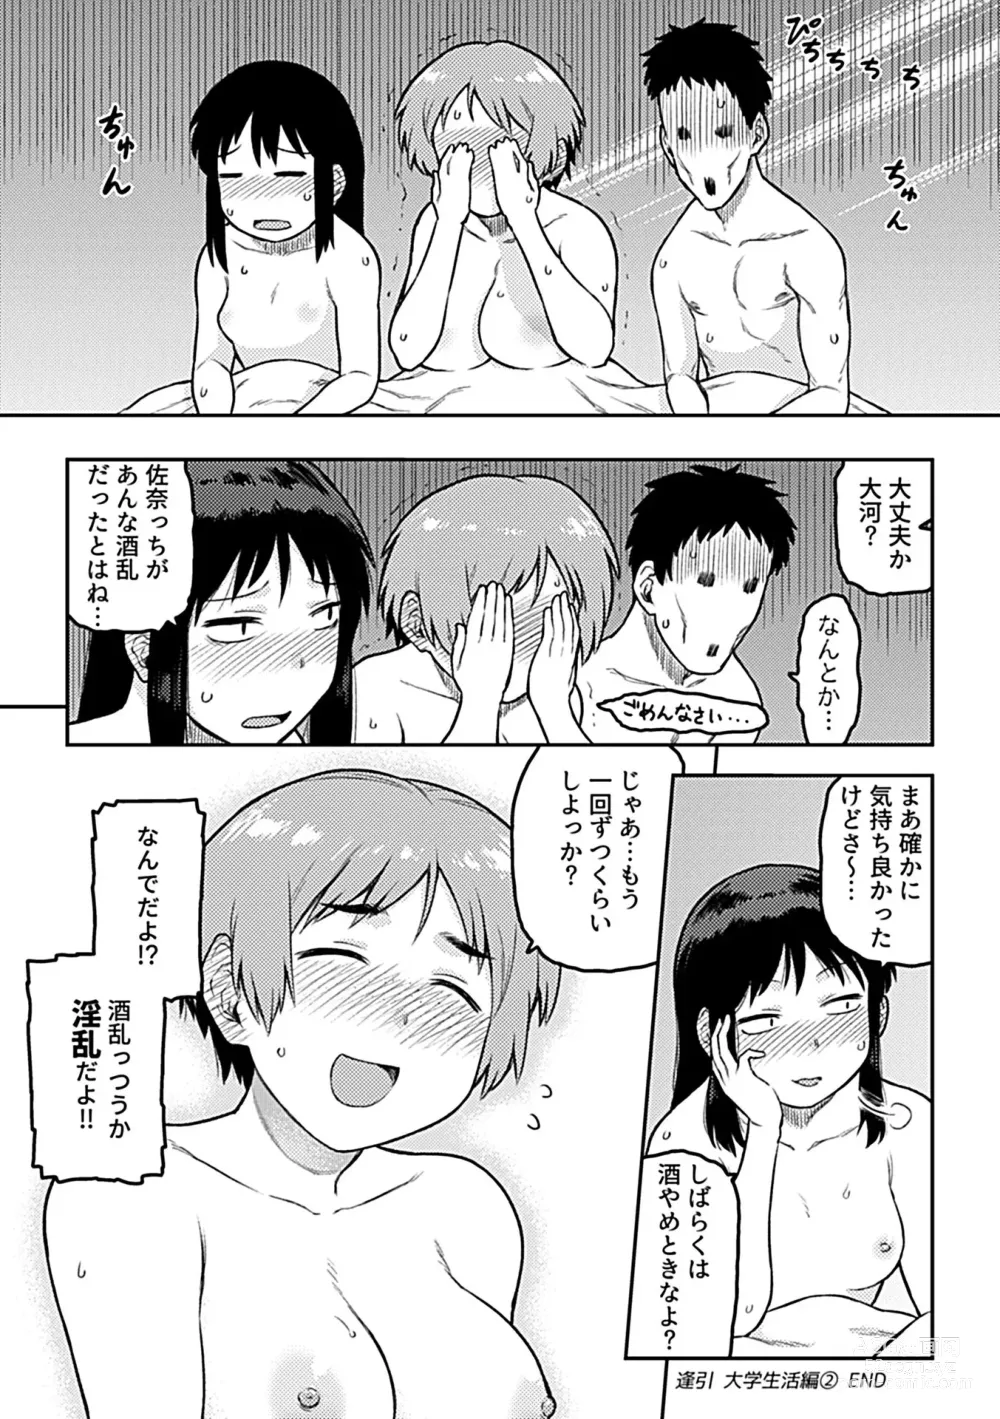 Page 196 of manga Aibiki